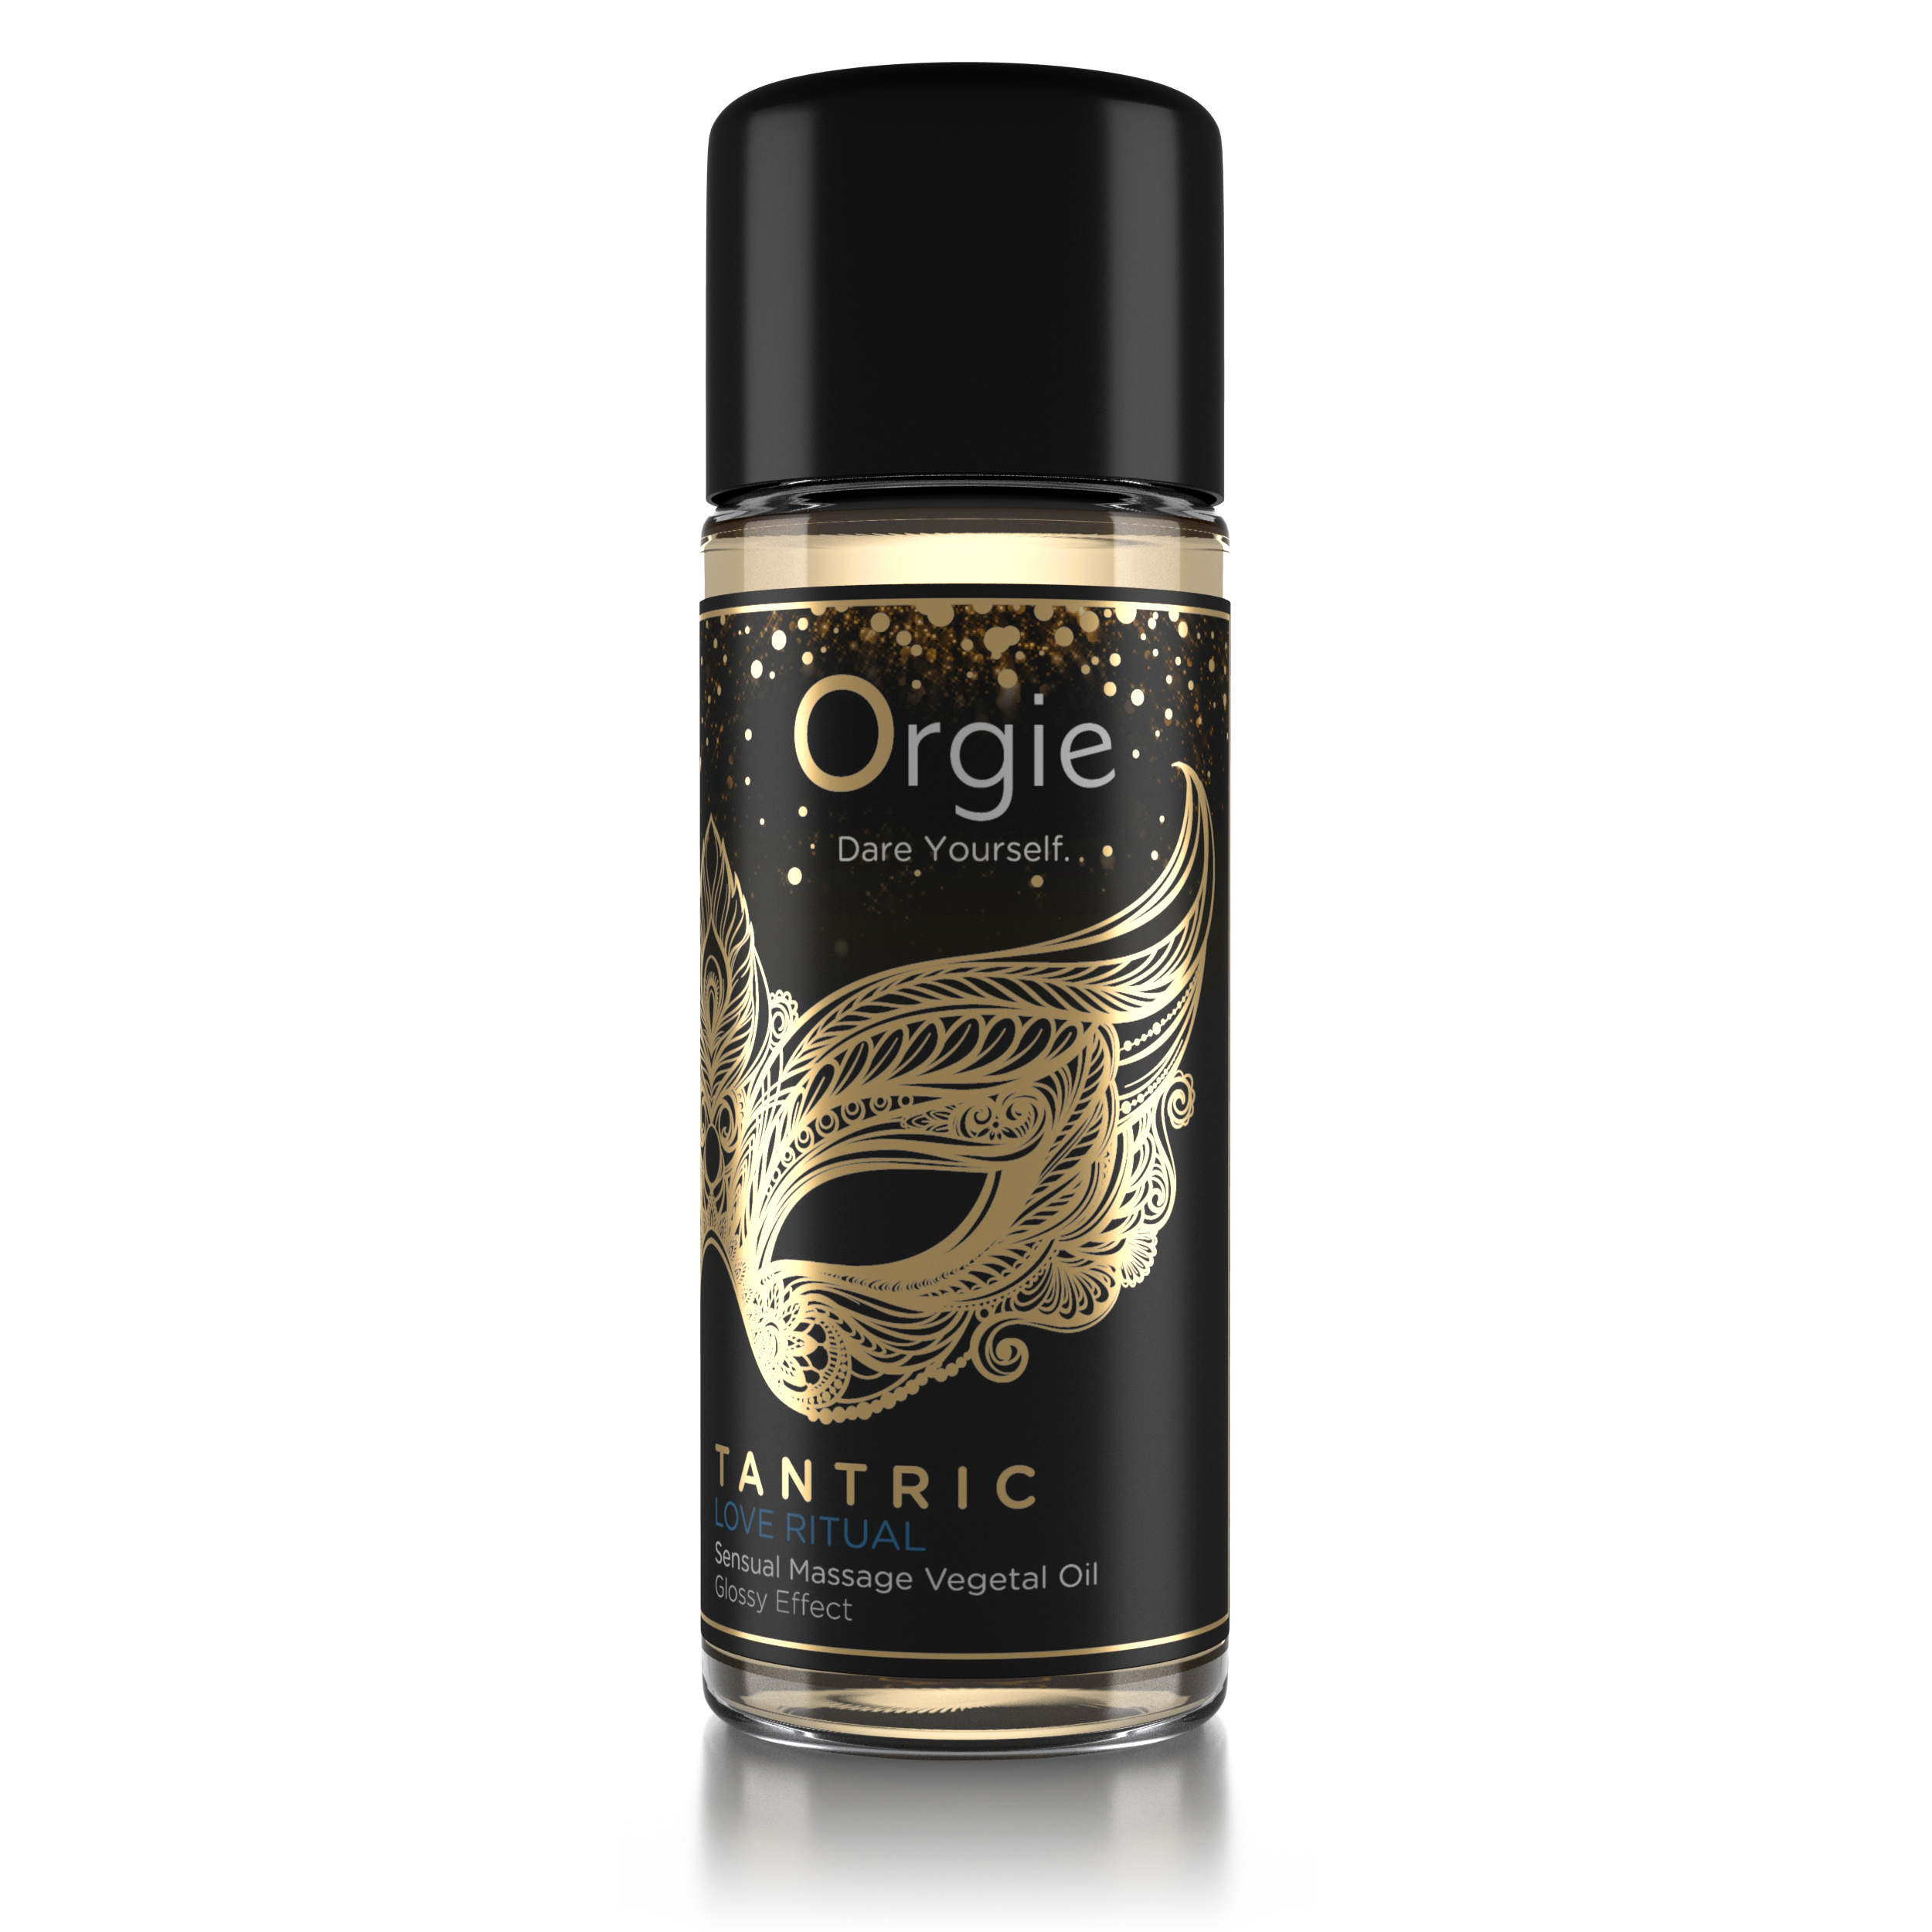 ORGIE Tantric Sensual Massage Oil Mini Size (3x30ml)